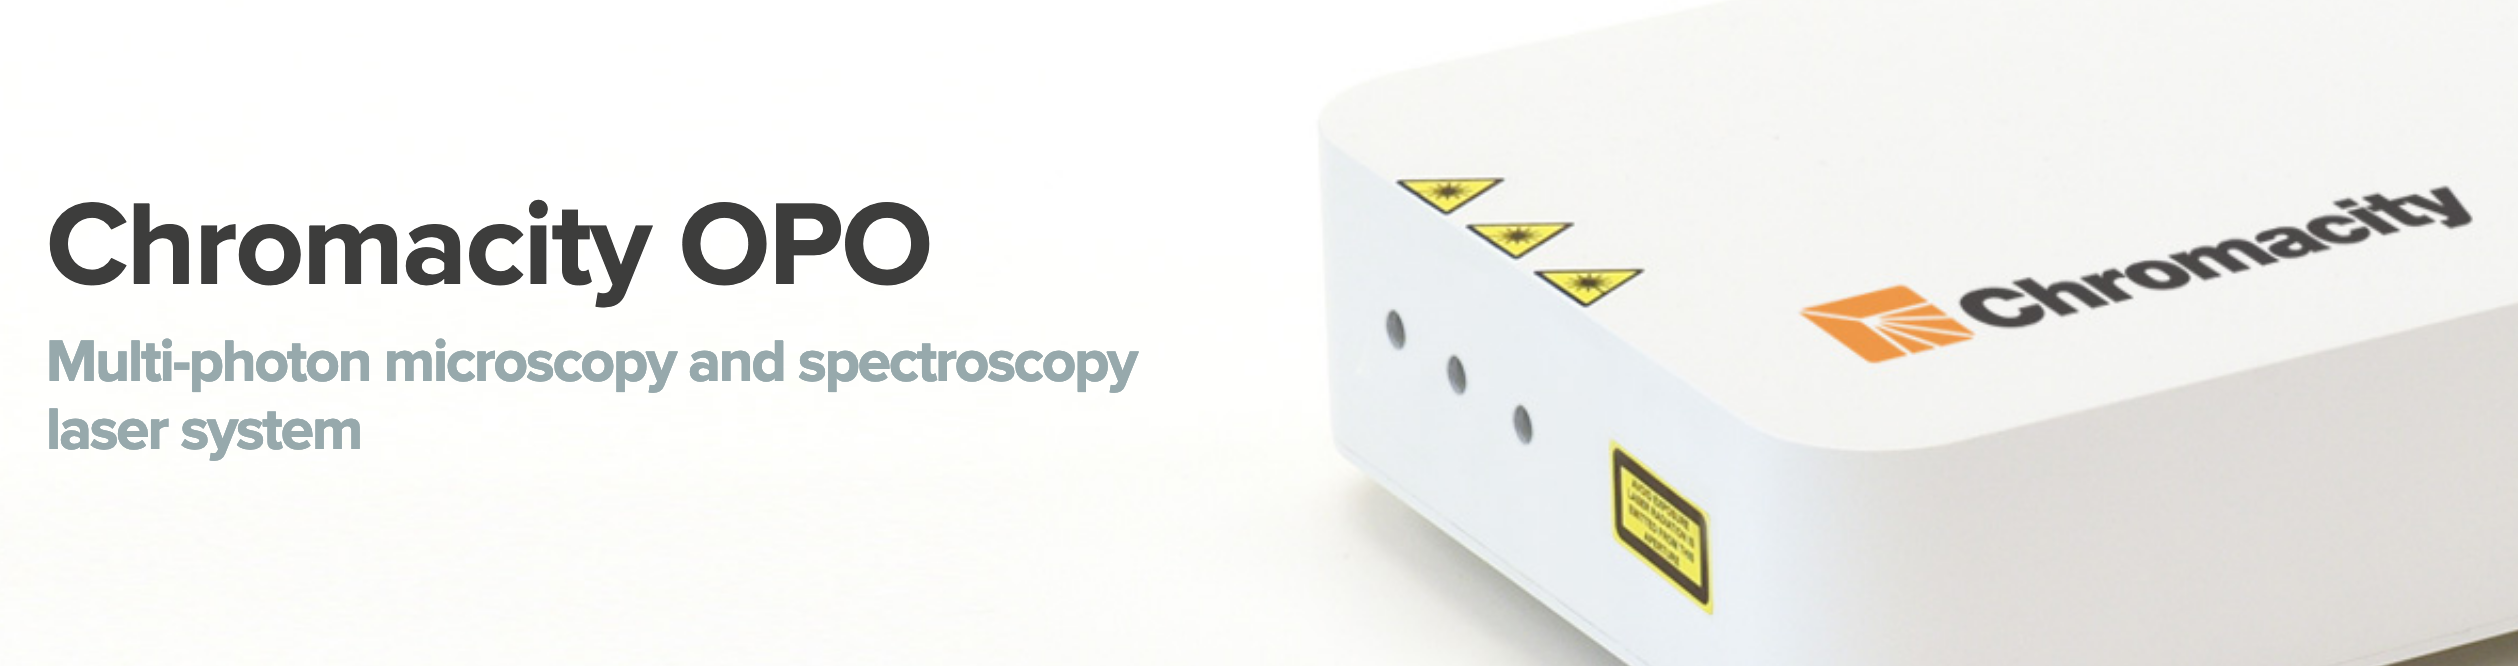 Chromacity-introduces-new-ultrafast-laser-systems